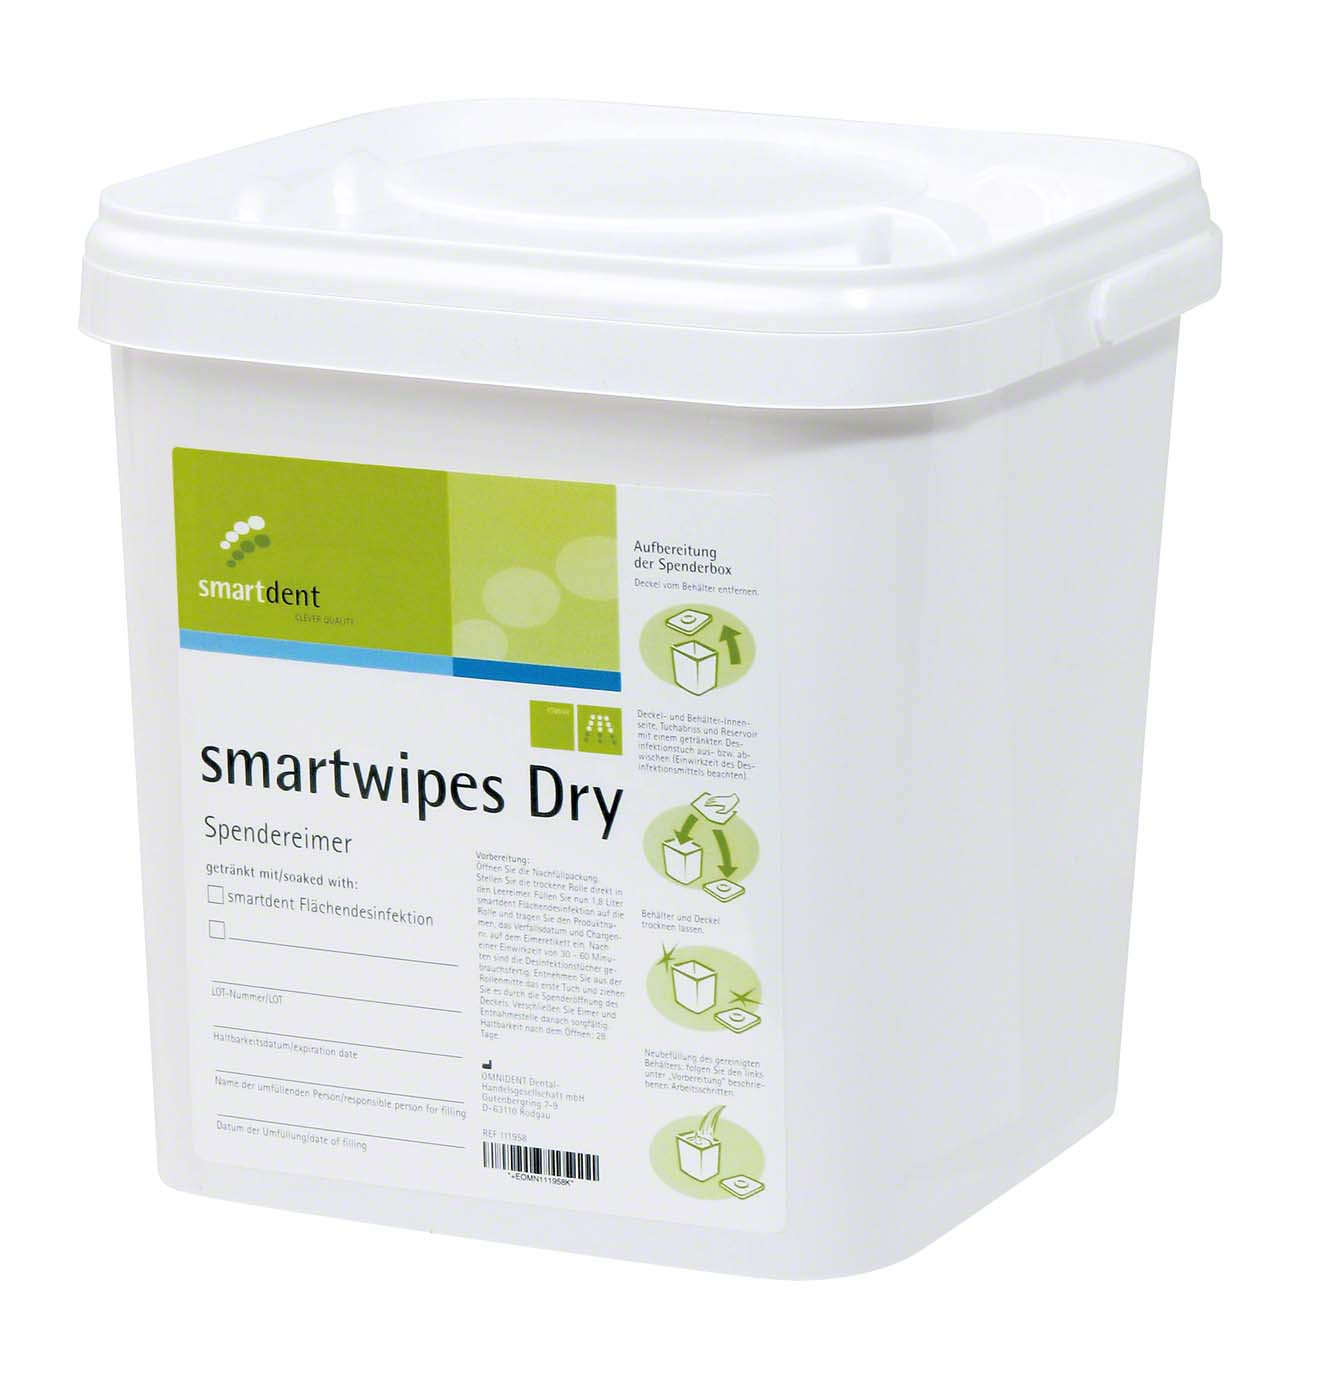 smartwipes Dry Spenderbox leer smartdent